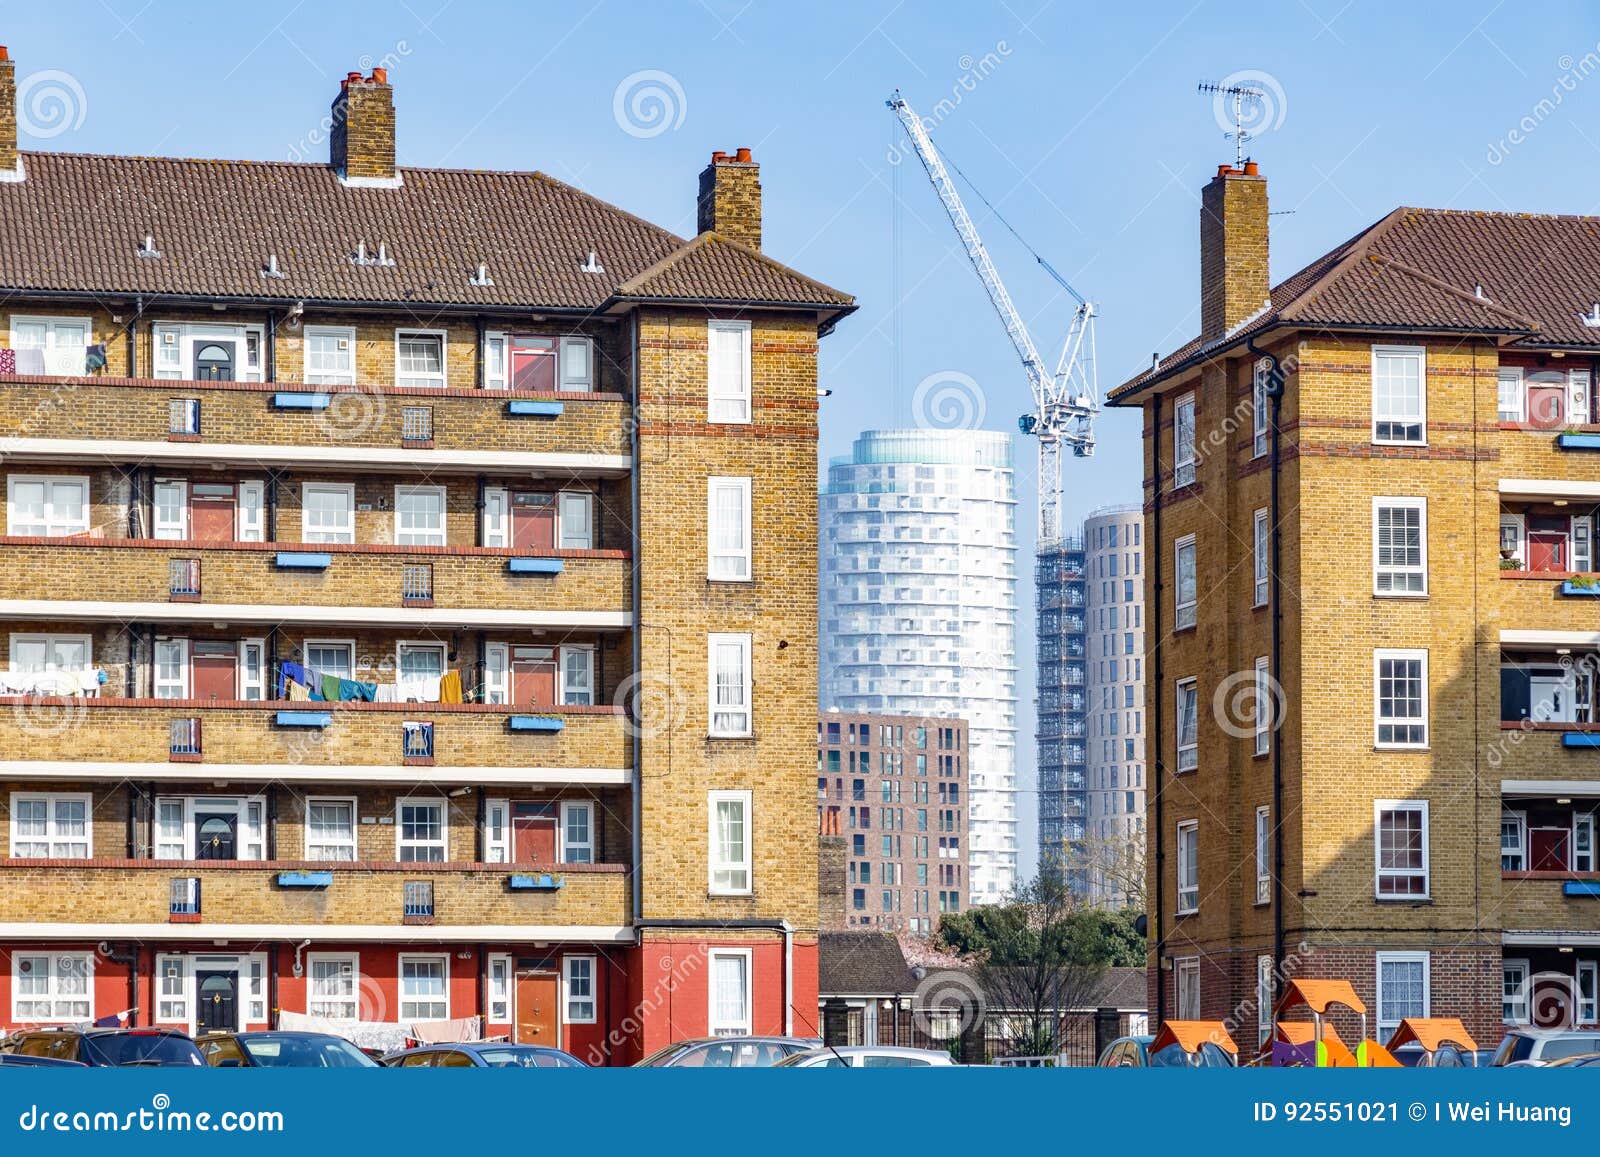 council housing blocks and modern tower block flats